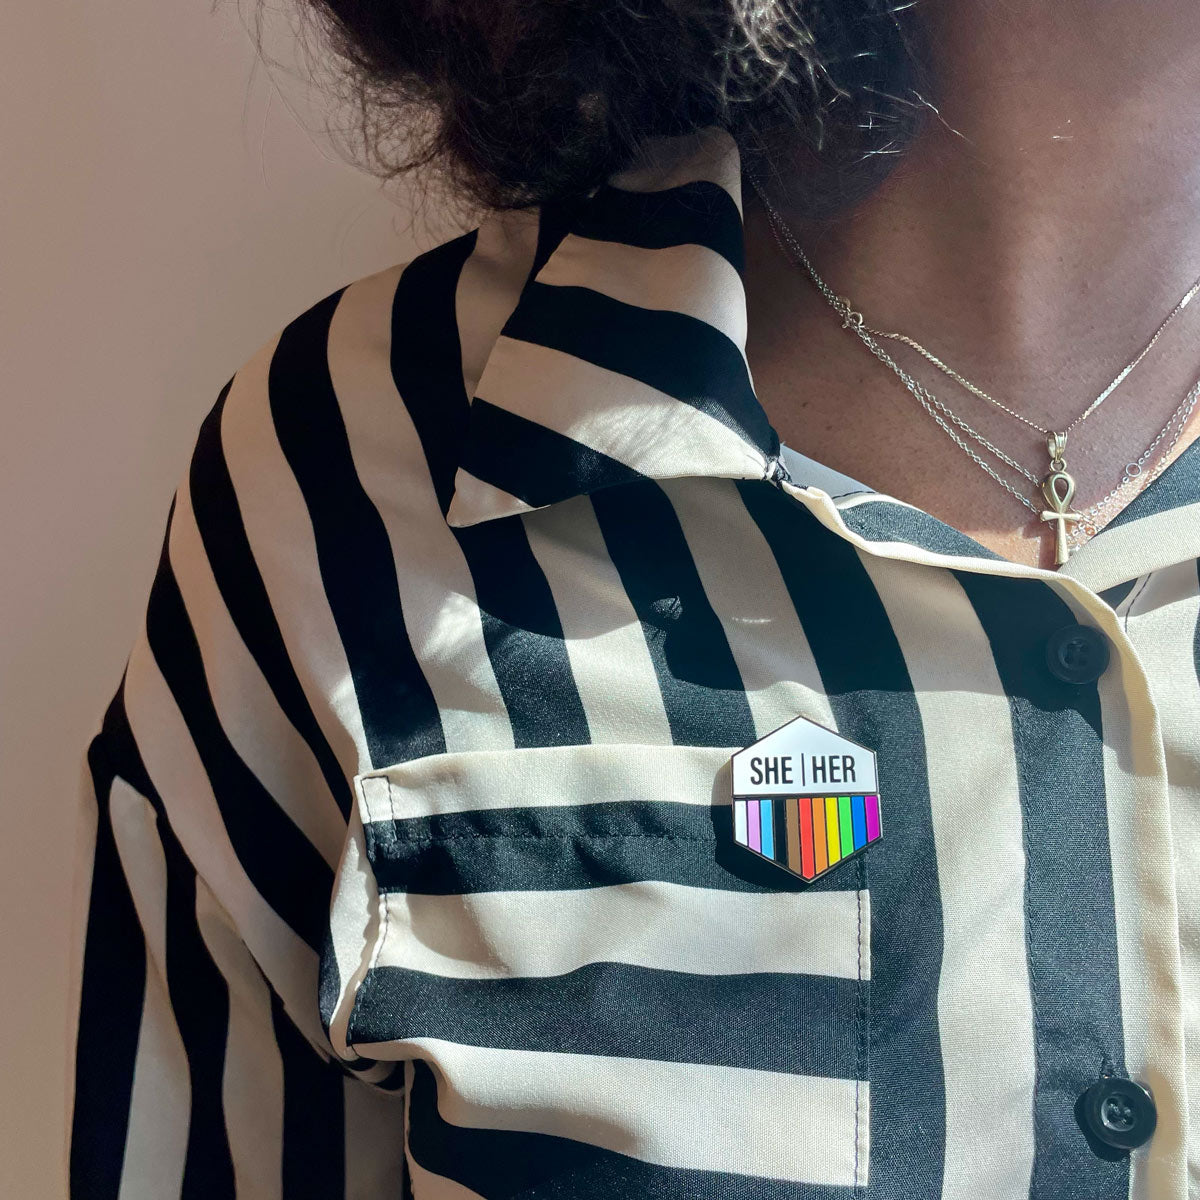 Pronoun + Pride Flag Magnetic Pin Set